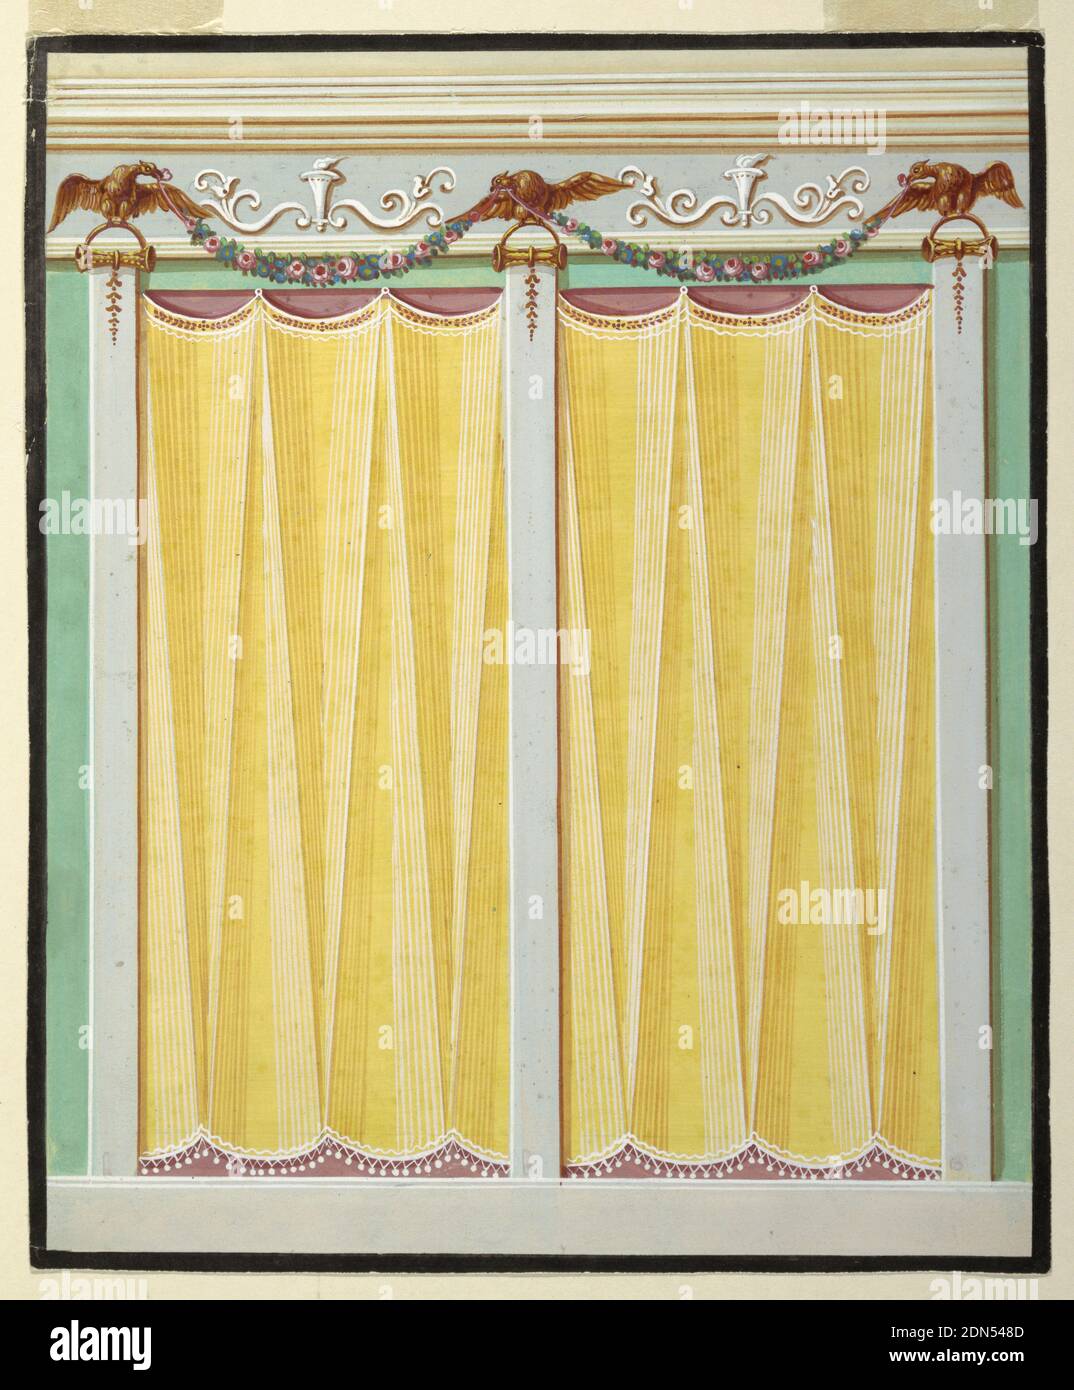 Cortinas de amarre de pintura de pájaros para ventanas, cortinas ajustables  de globo, acuarela vintage, verde azulado, nota musical degradada